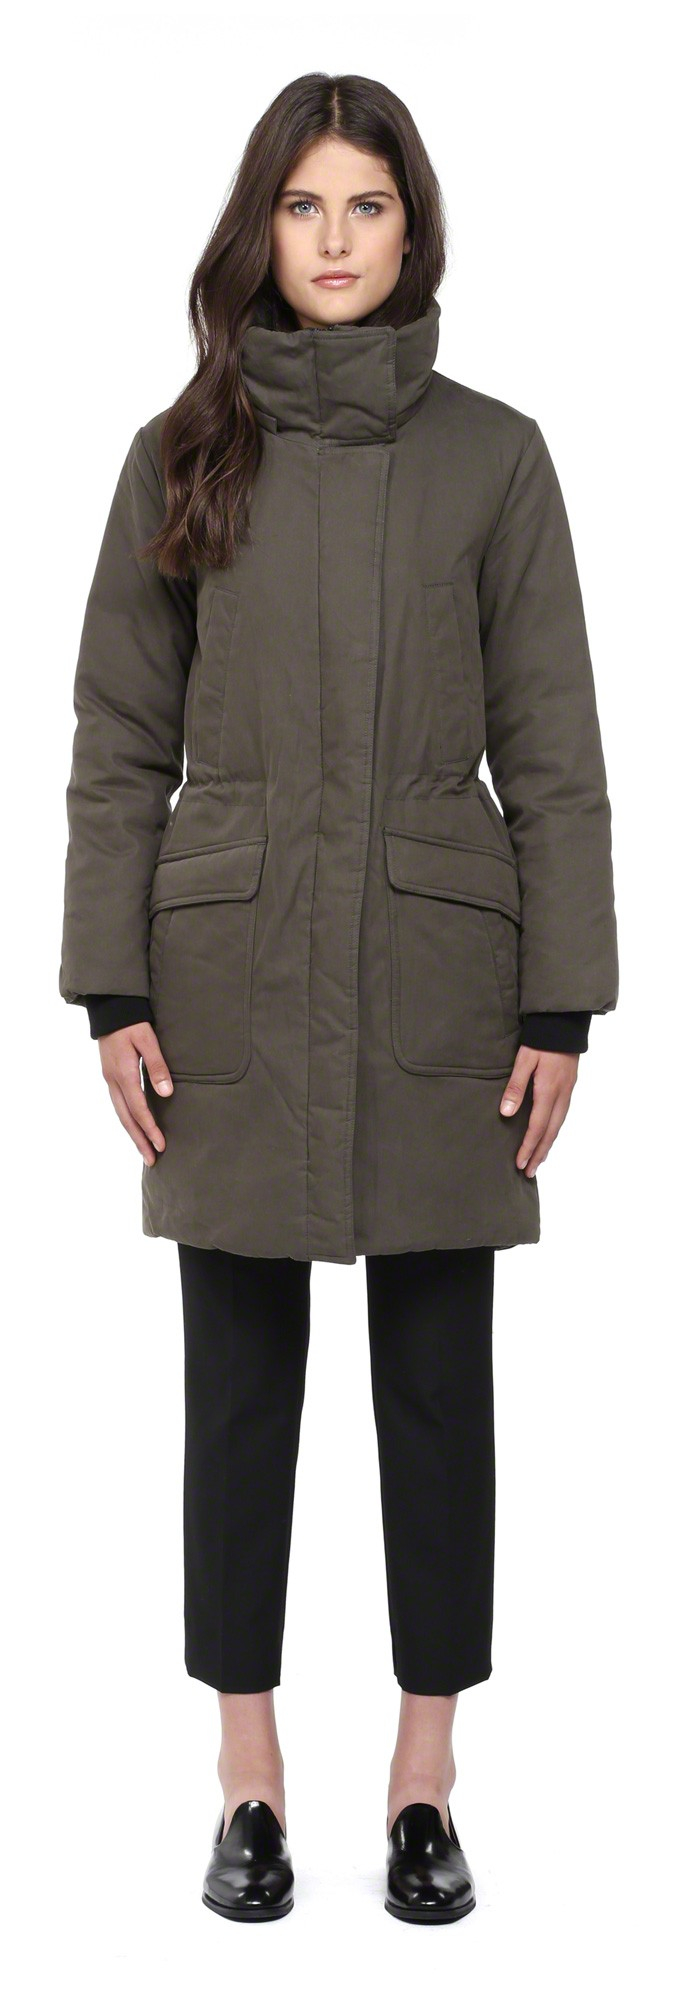 SOIA & KYO Edita Military Winter Parka Coat With Fur Hood in Gray - Lyst